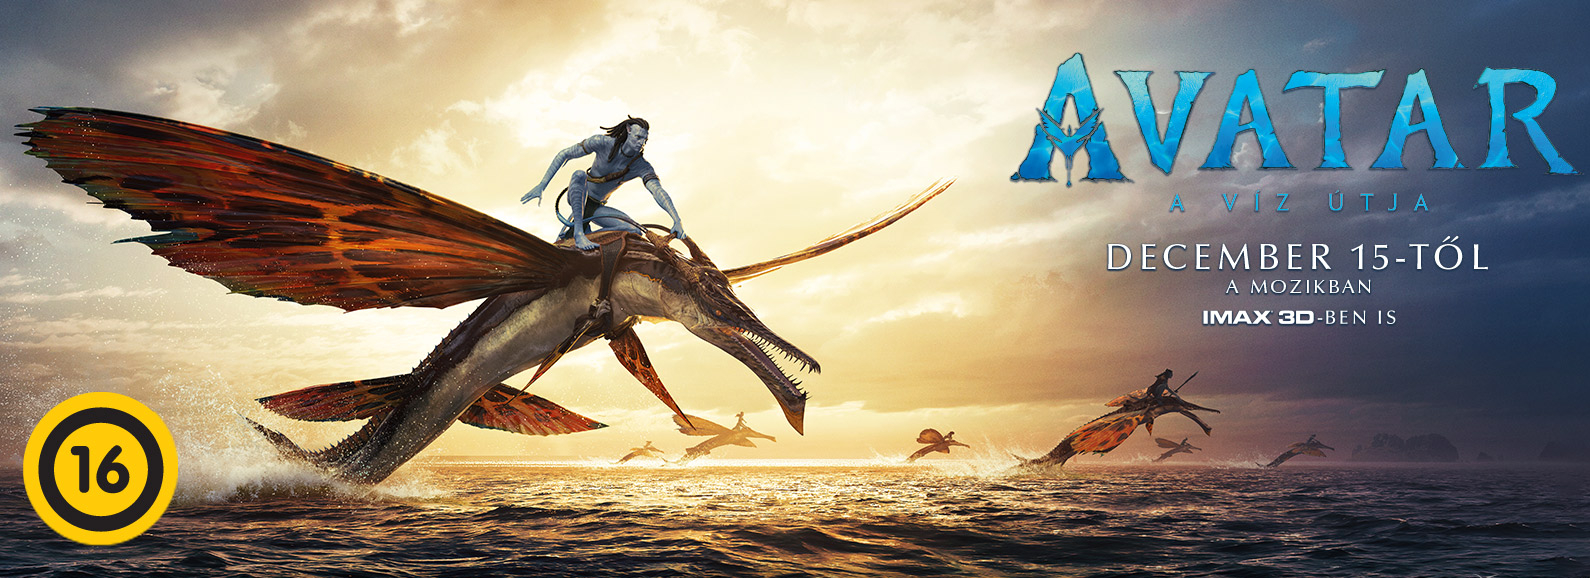 Disney made 4 billion with Avatar 2  Download Book  Miraz